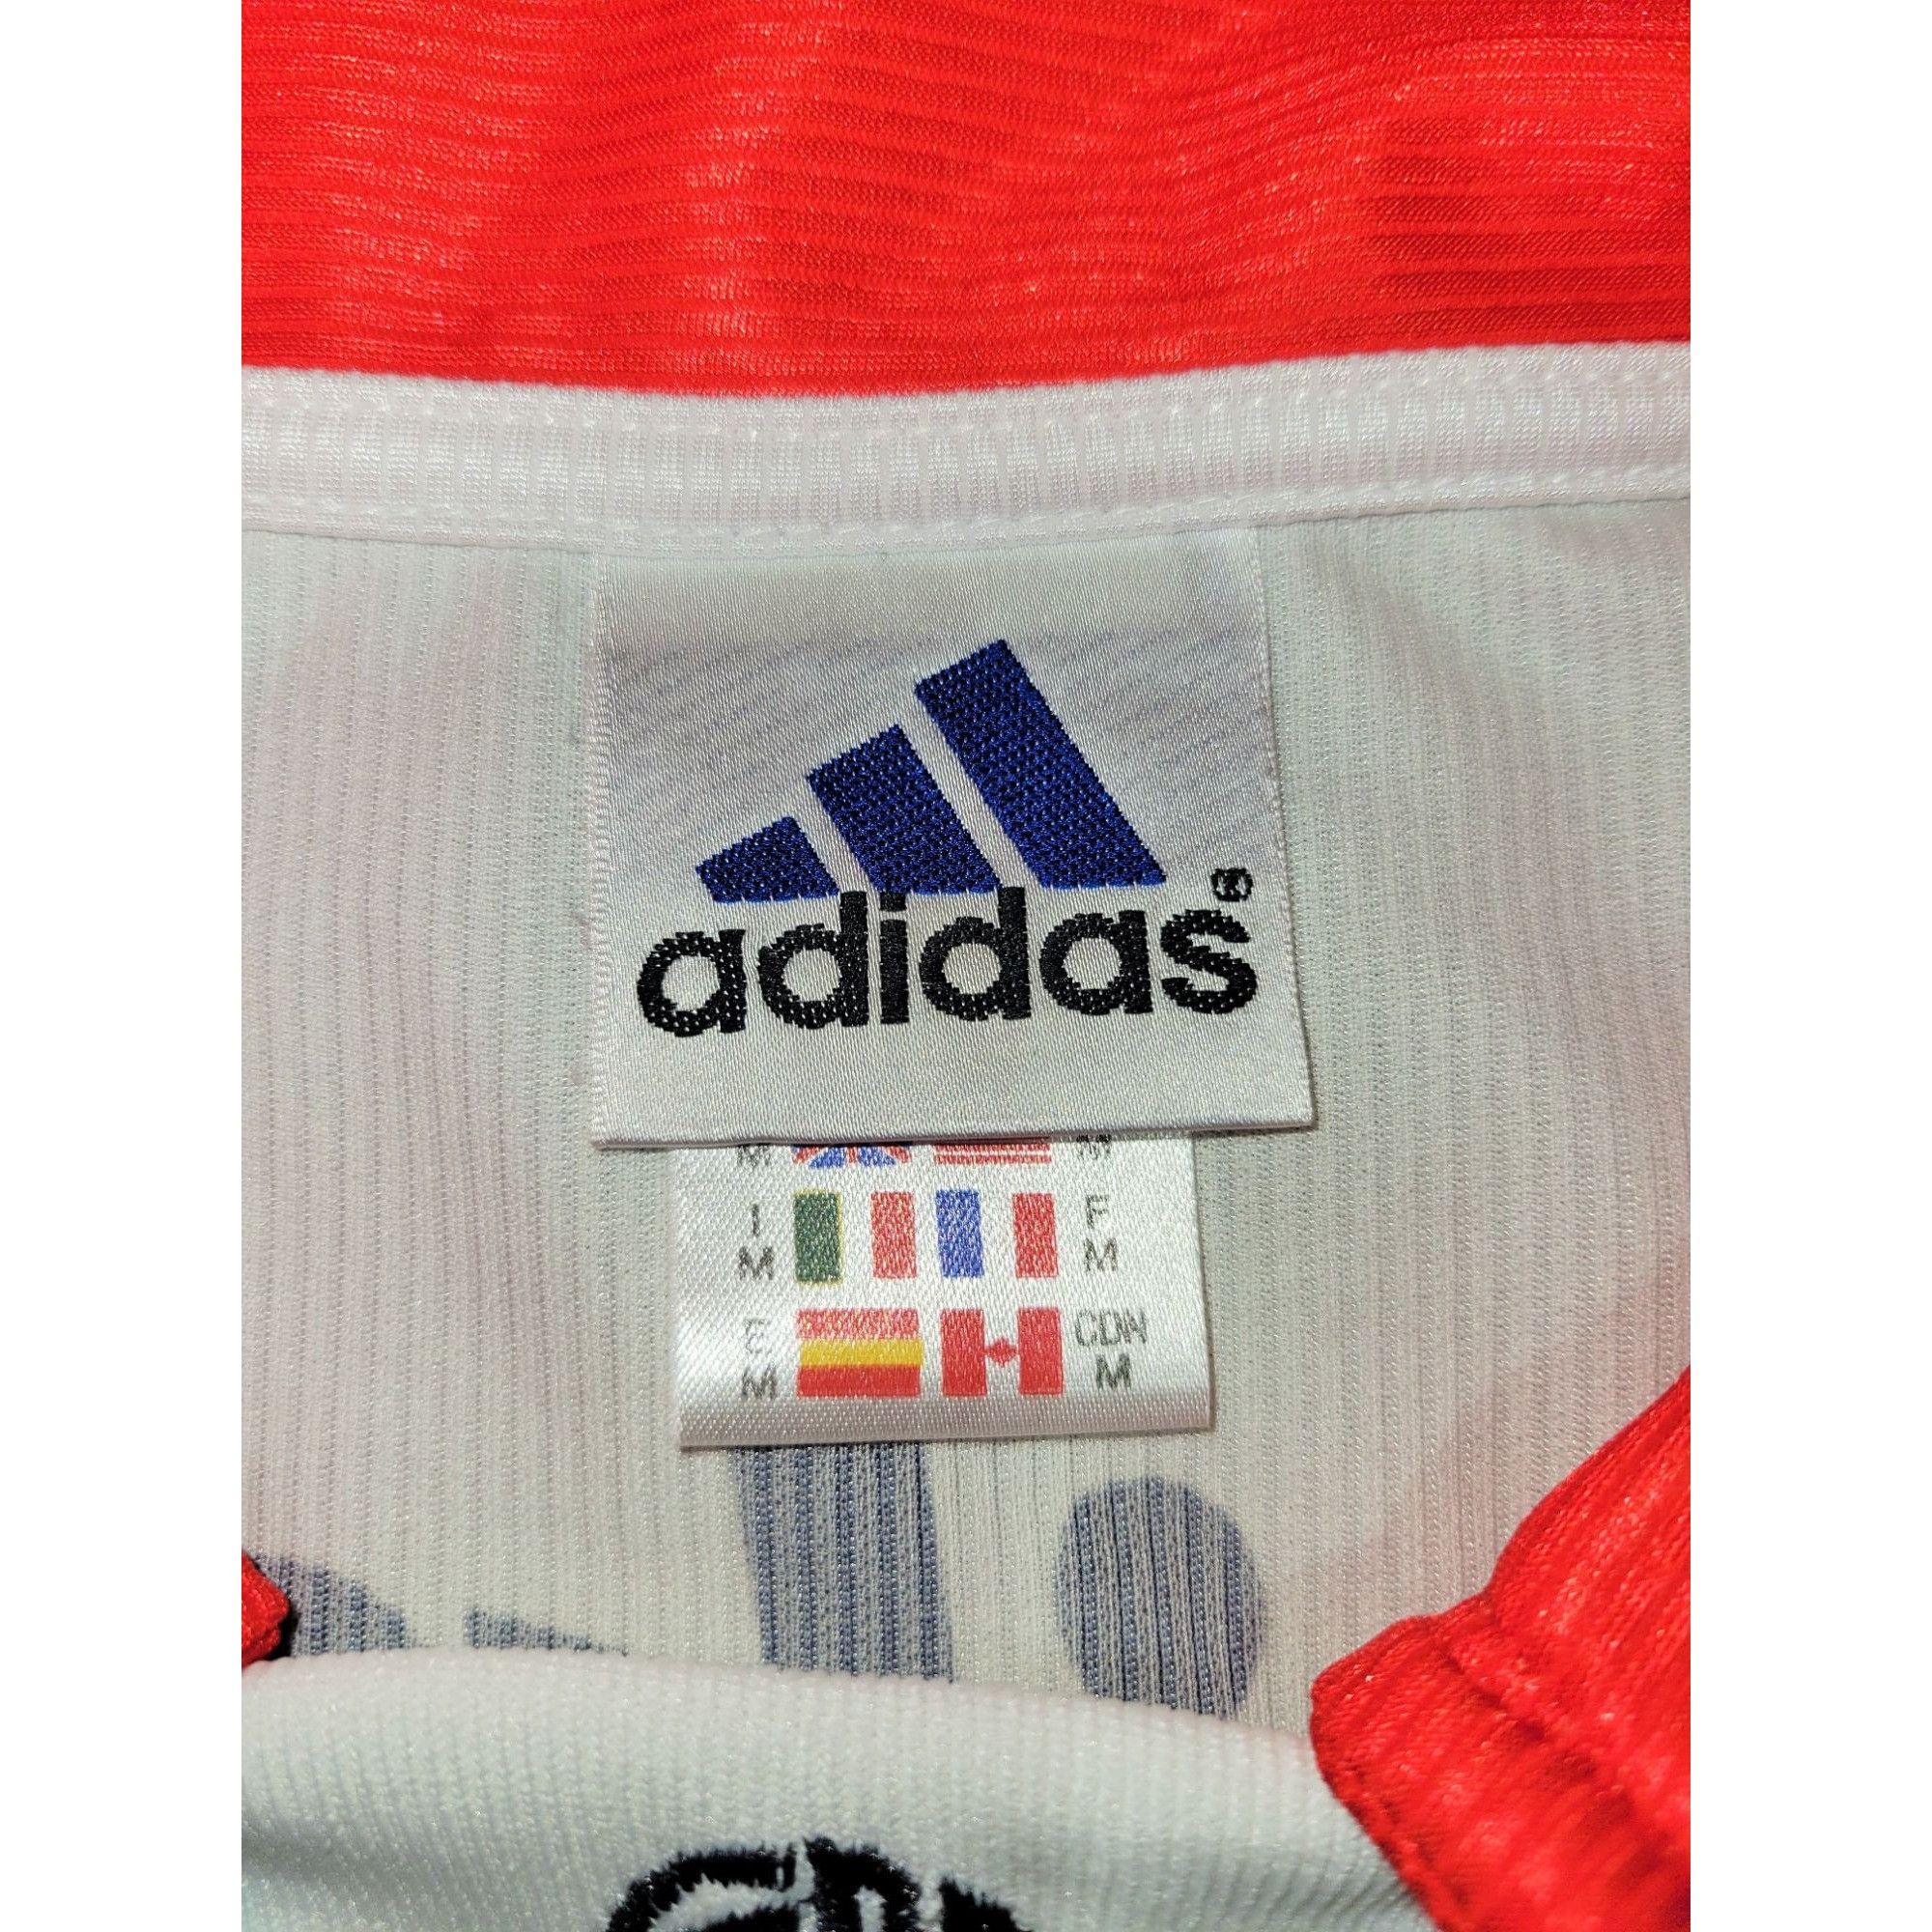 Adidas River Plate Adidas 1998 1999 2000 LTD EDITION Soccer Jersey Size US M / EU 48-50 / 2 - 5 Thumbnail